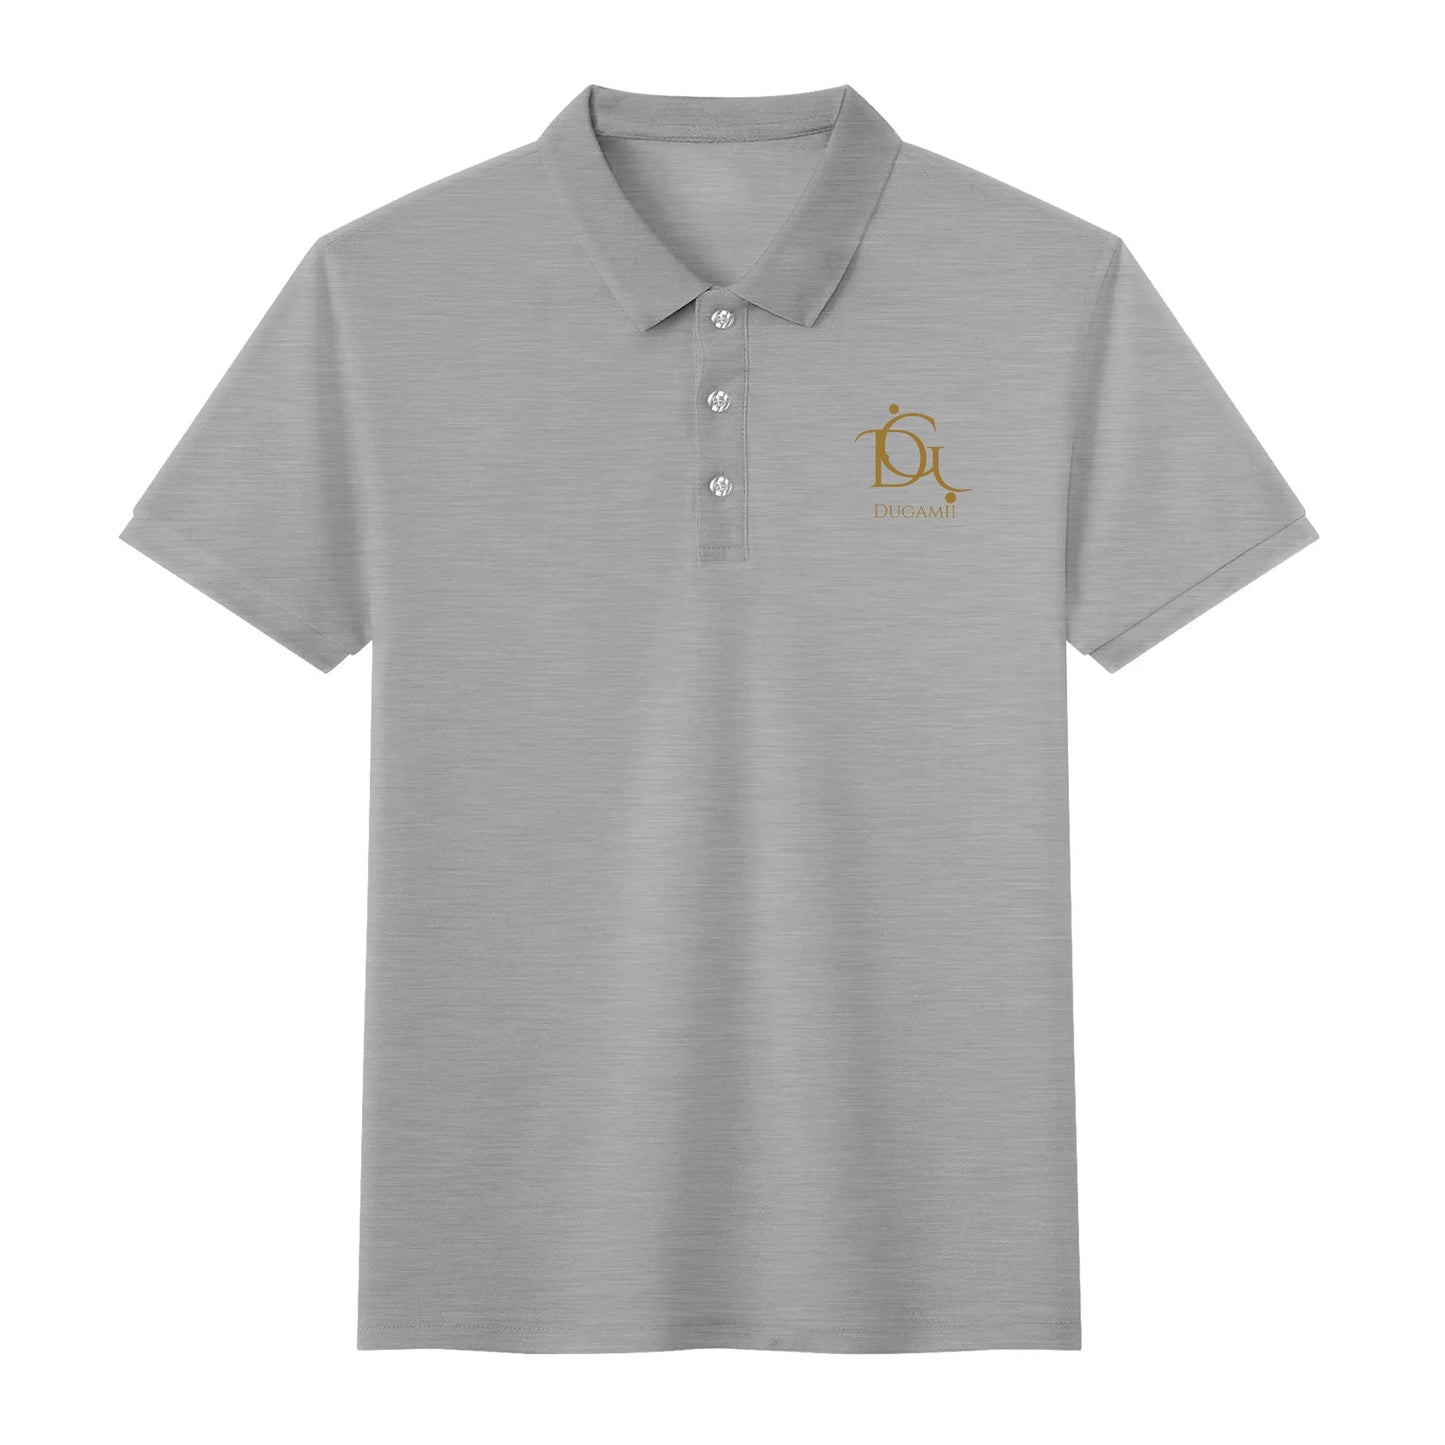 DuGamii Unisex Cotton Casual Top Button Shirt